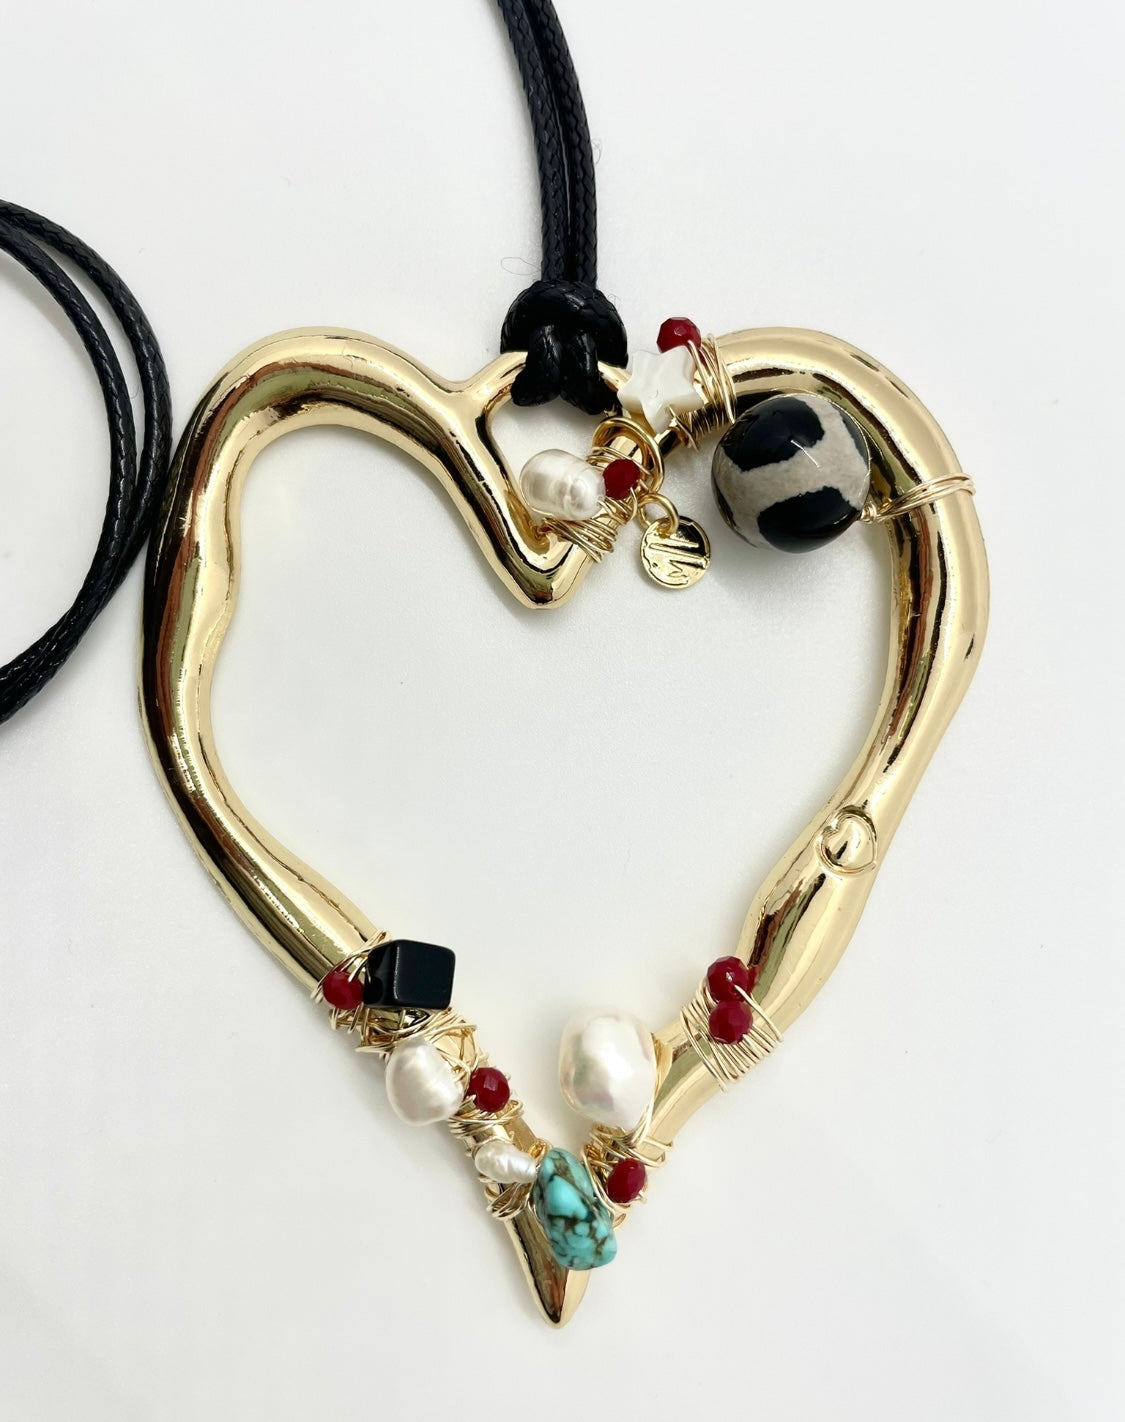 Heart long necklace. Unique piece hand made.